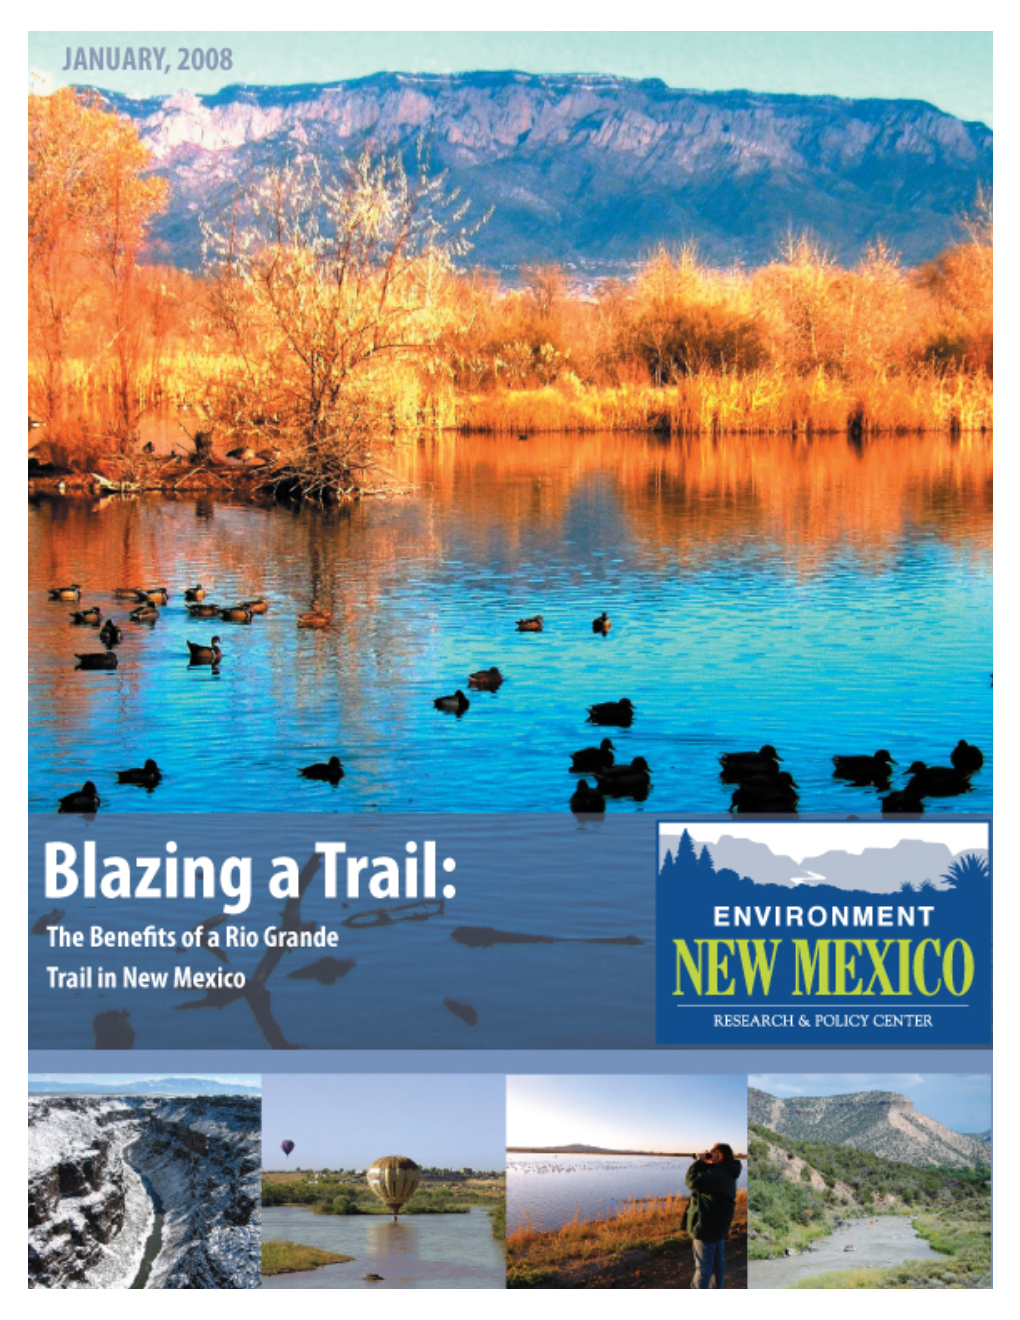 The Benefits of a Rio Grande Trail in New Mexico